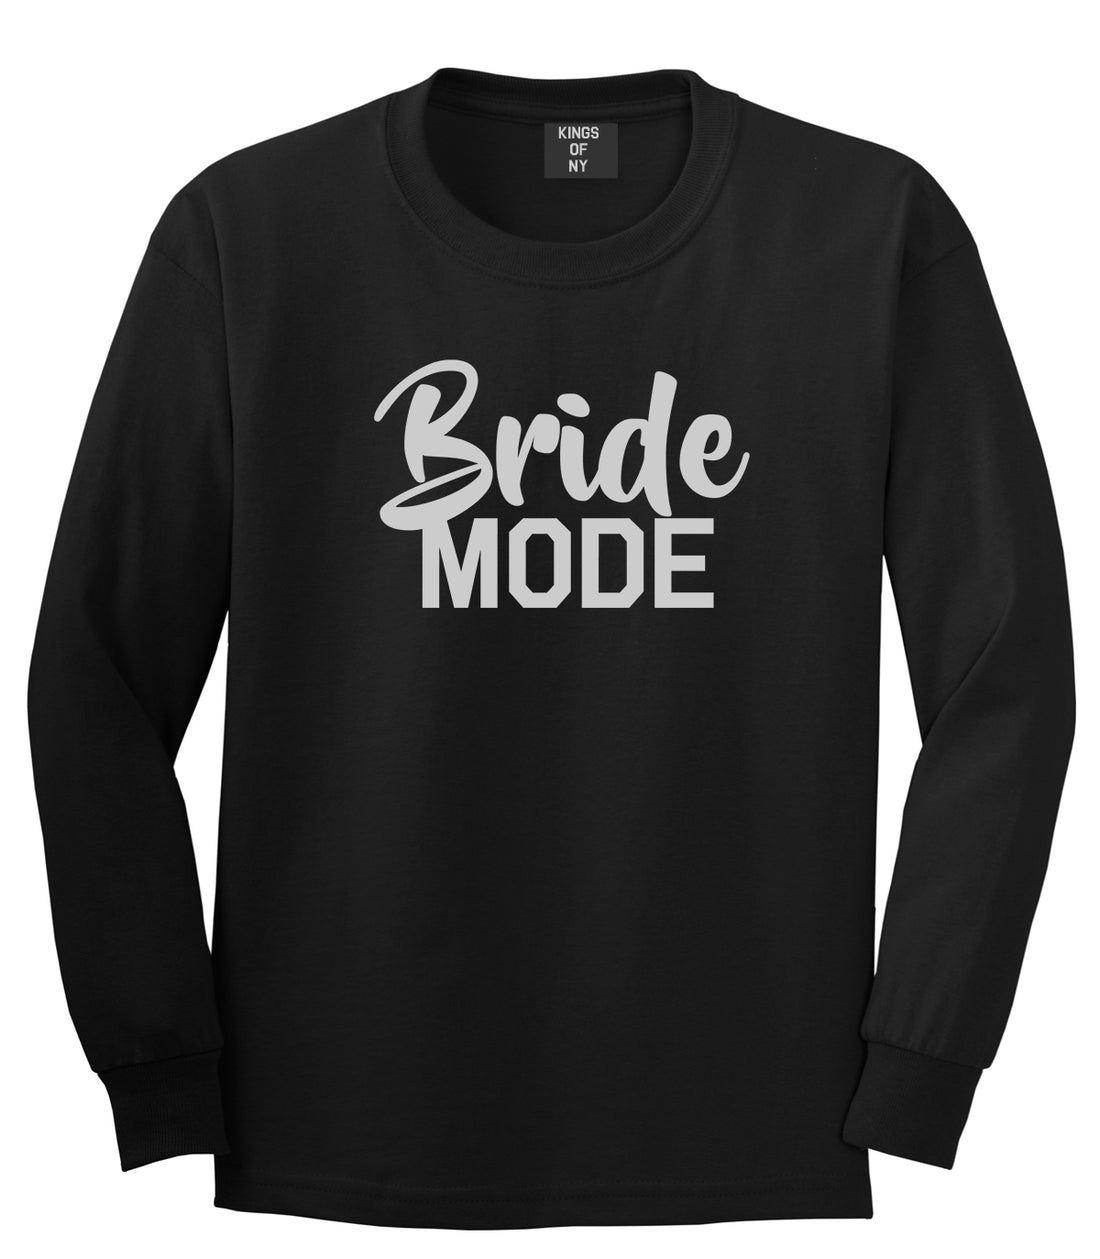 Bride Mode Bridal Mens Black Long Sleeve T-Shirt by KINGS OF NY